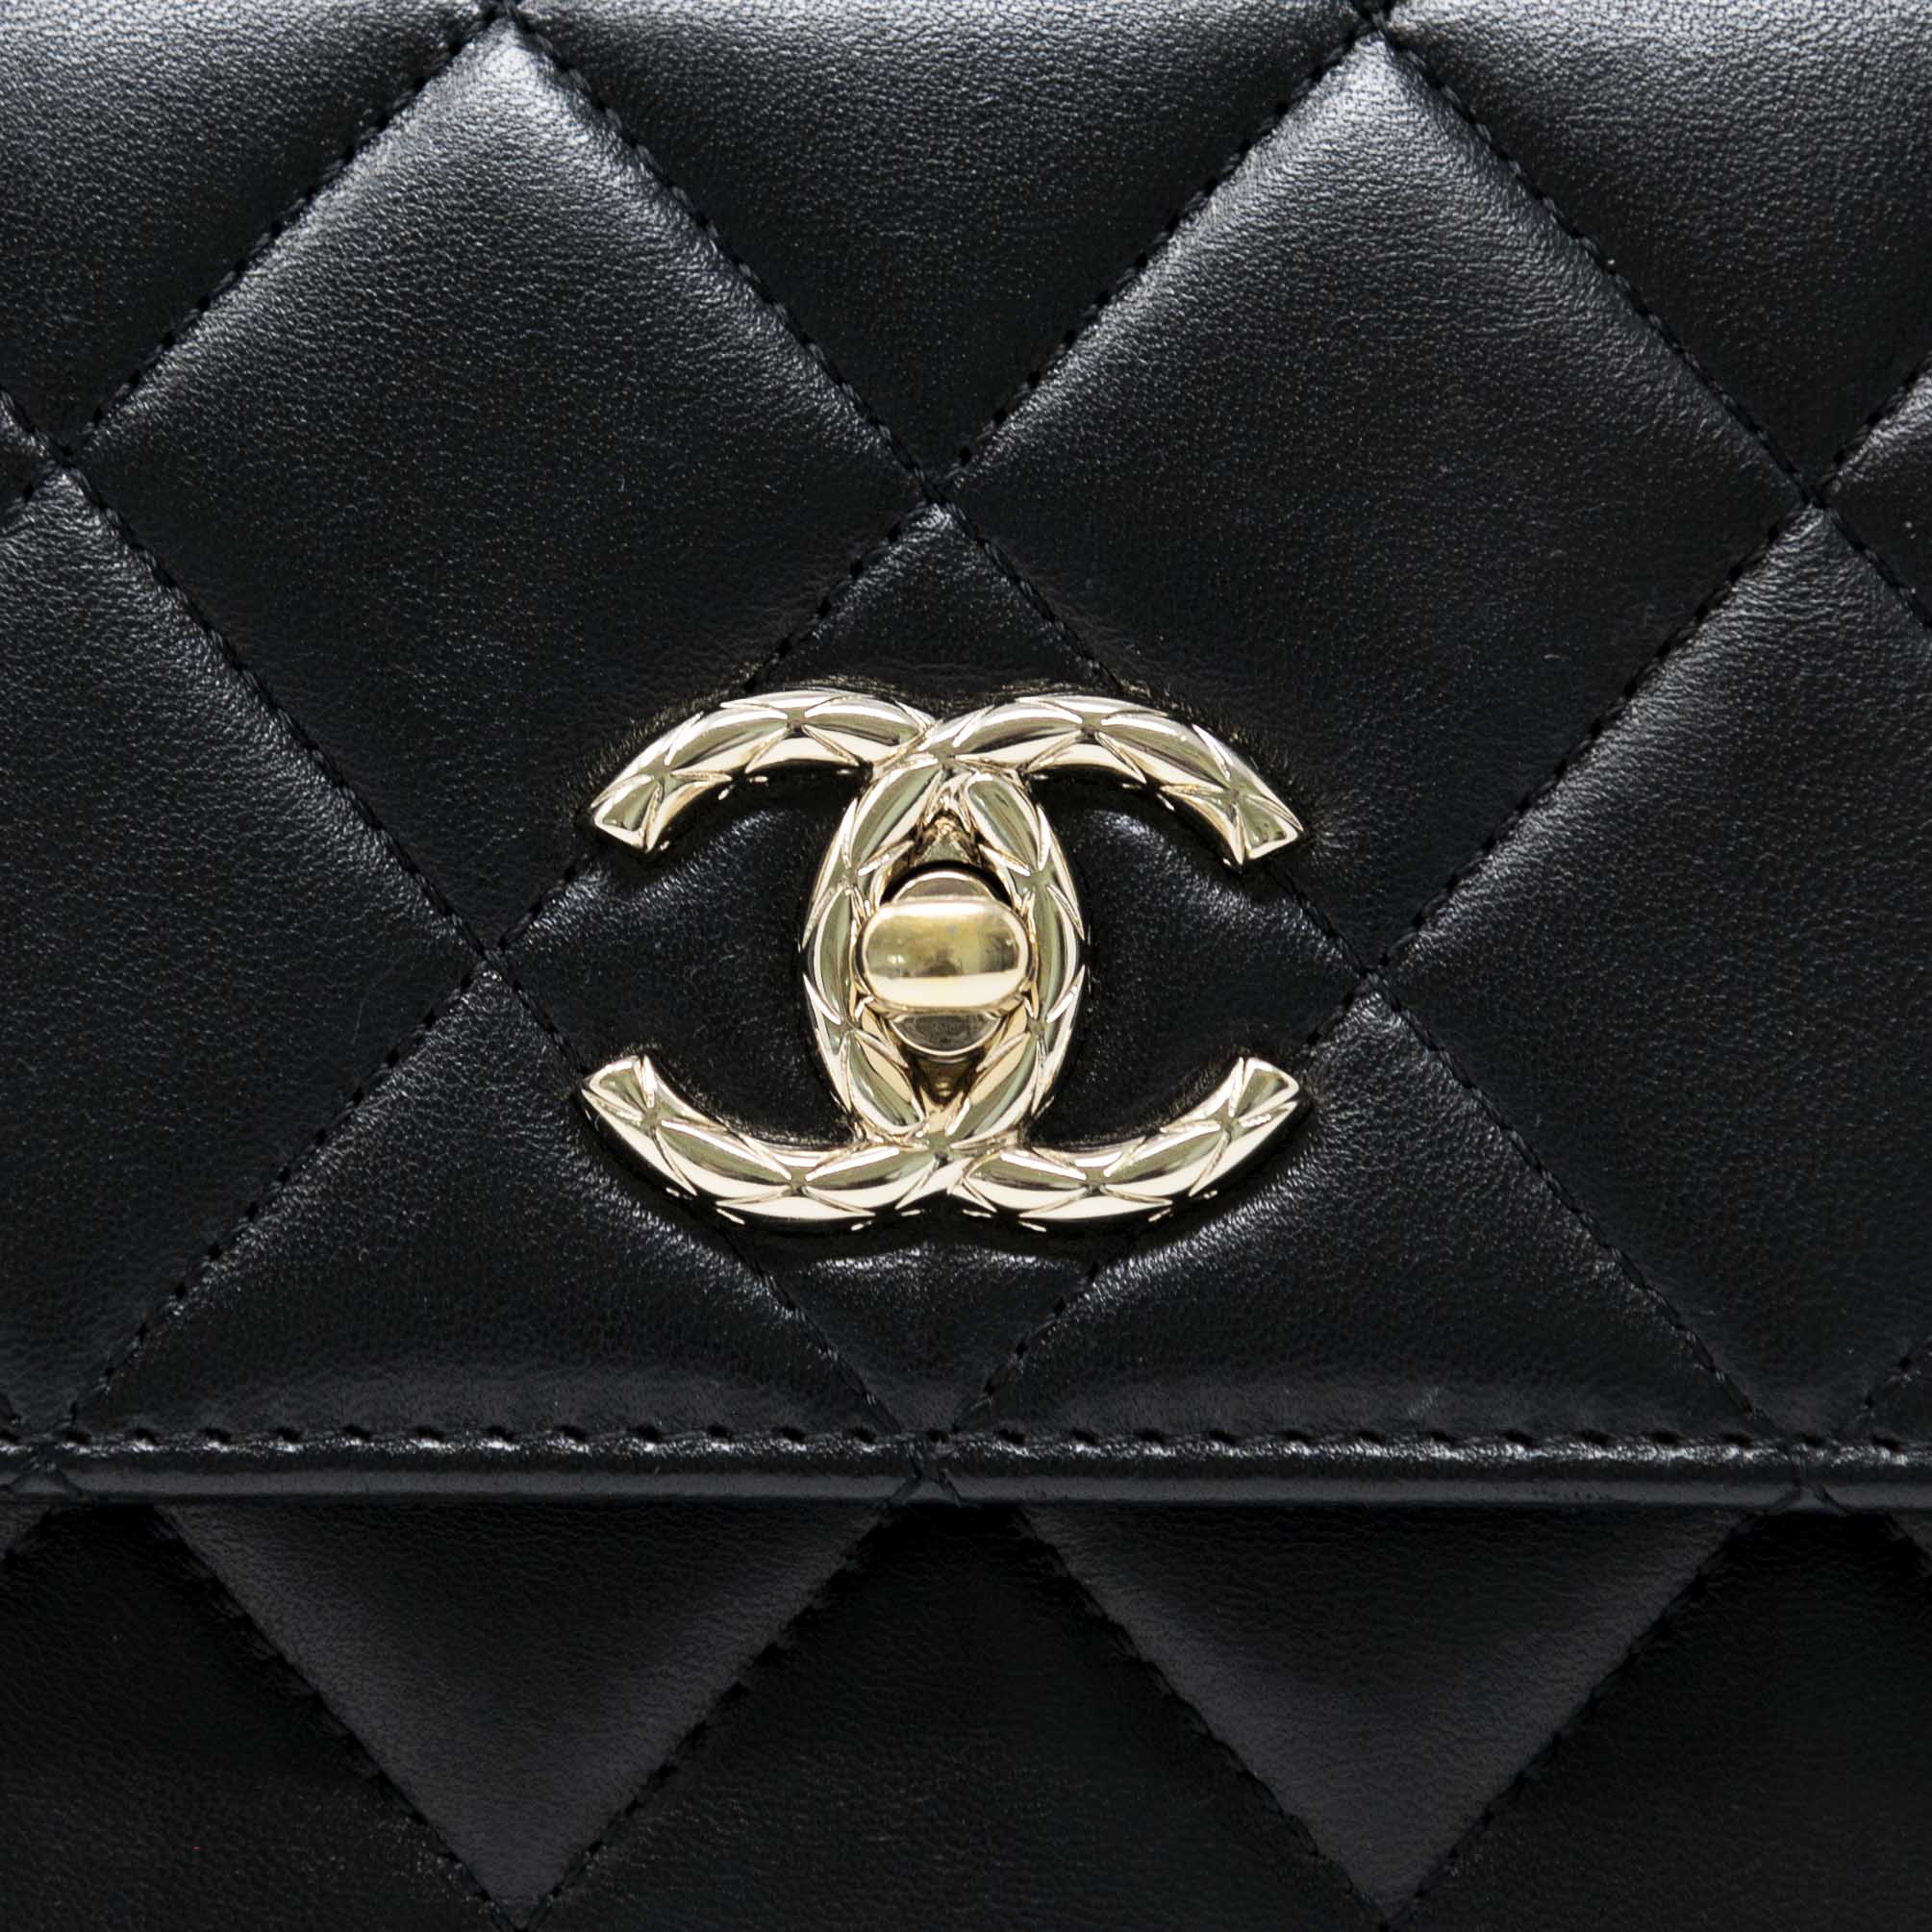 Chanel Black Medium Trendy Flap